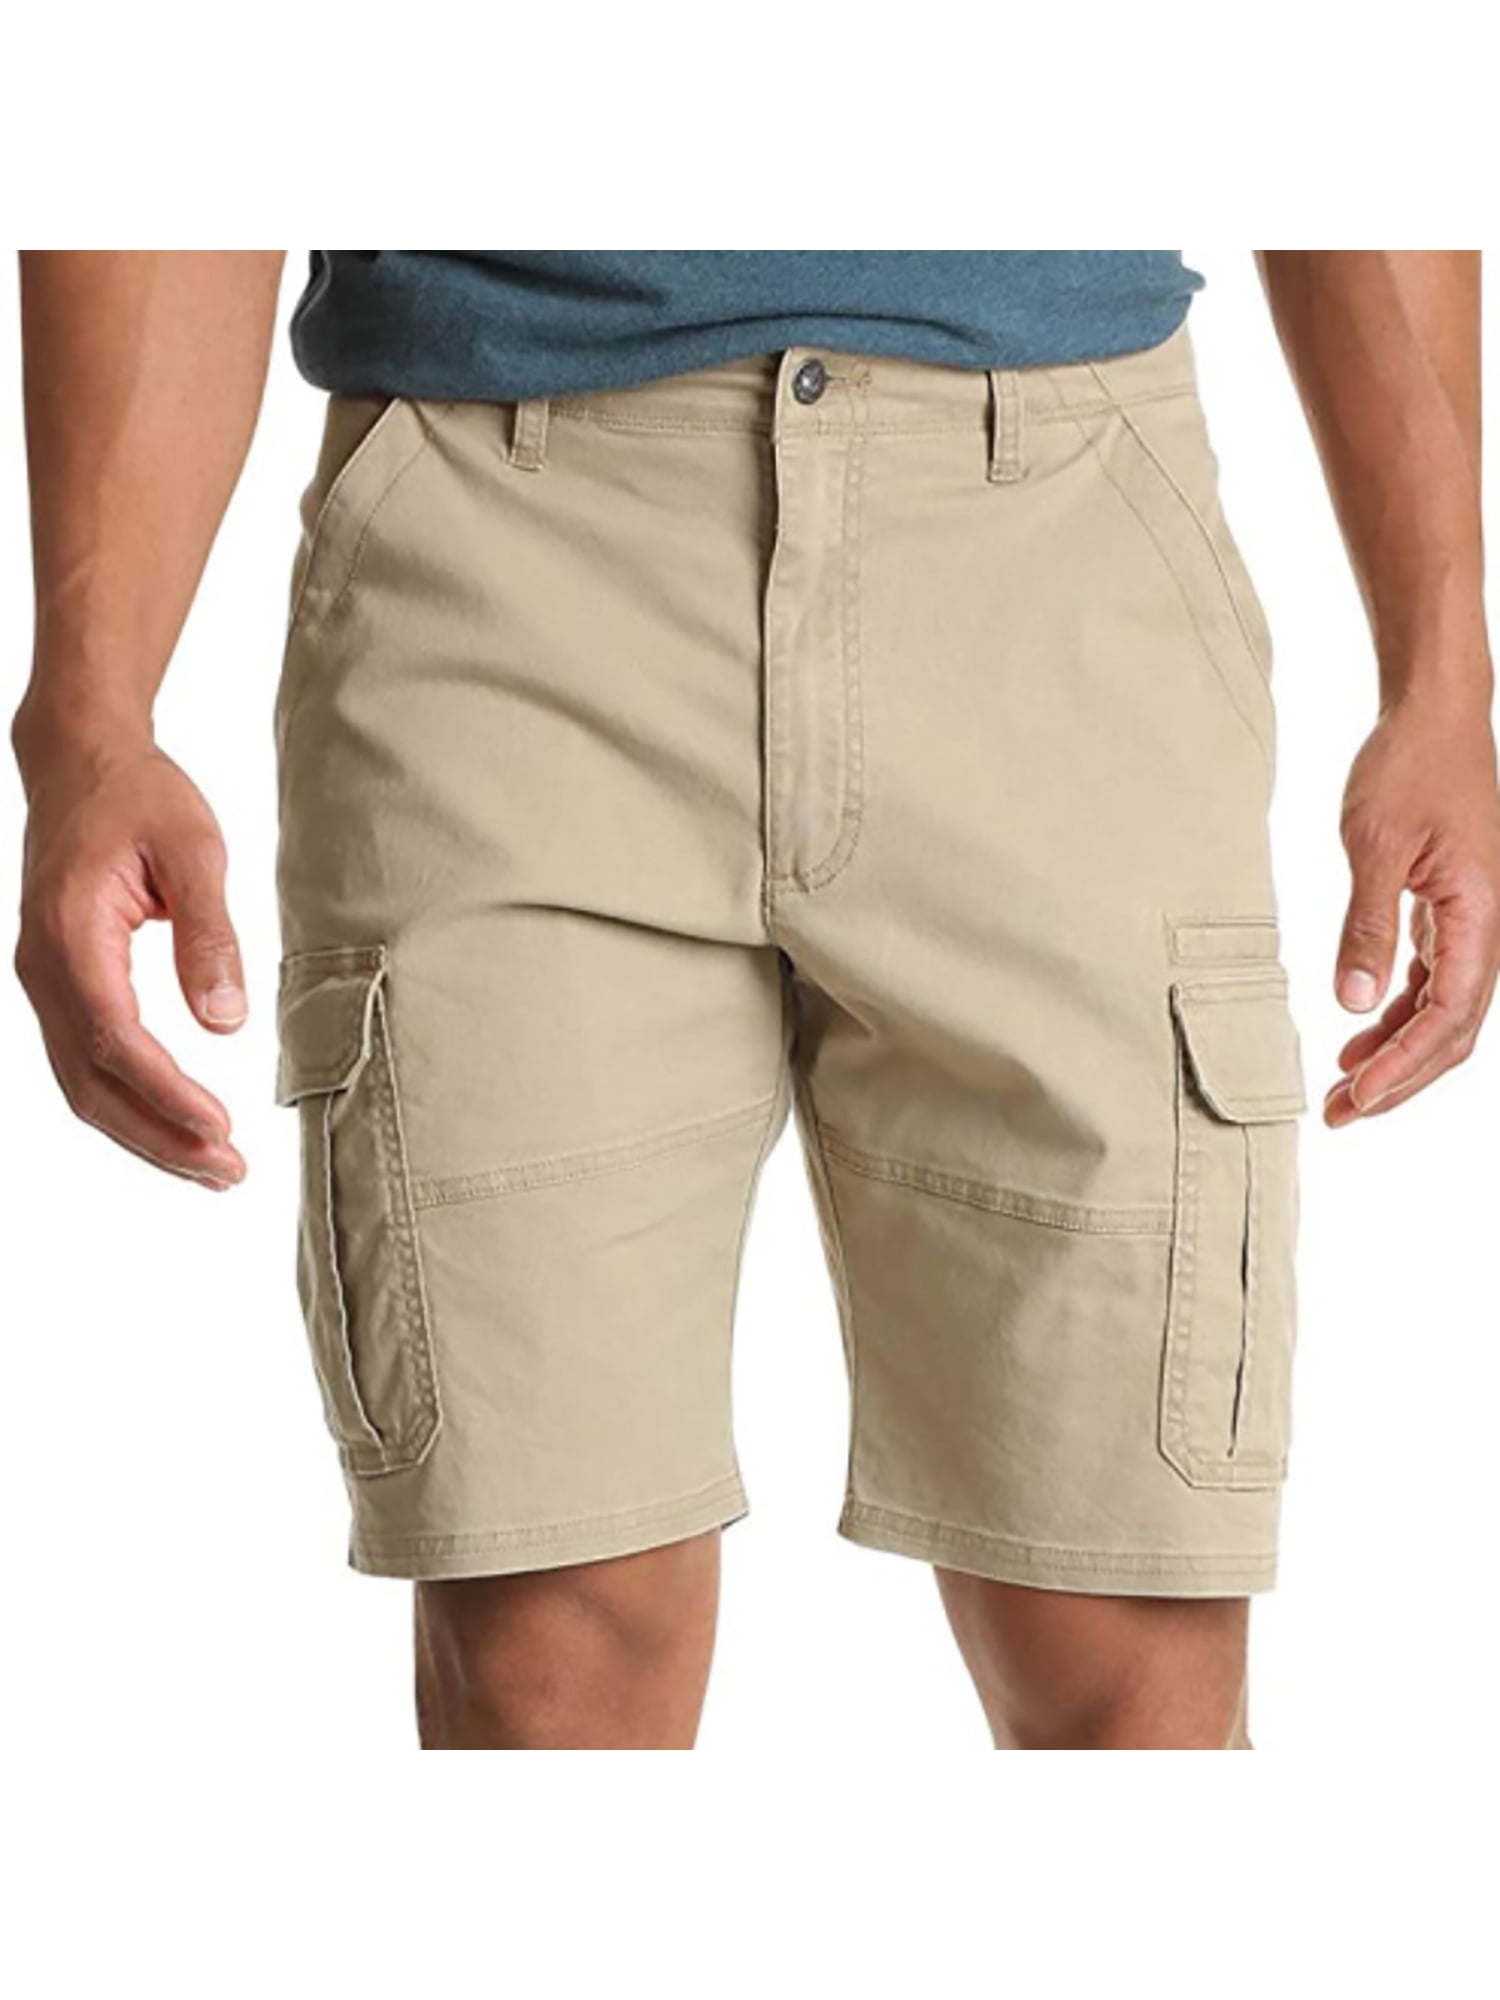 UKAP Lightweight Outdoor Hiking Zip Shorts for Men Quick Dry Stretch ...